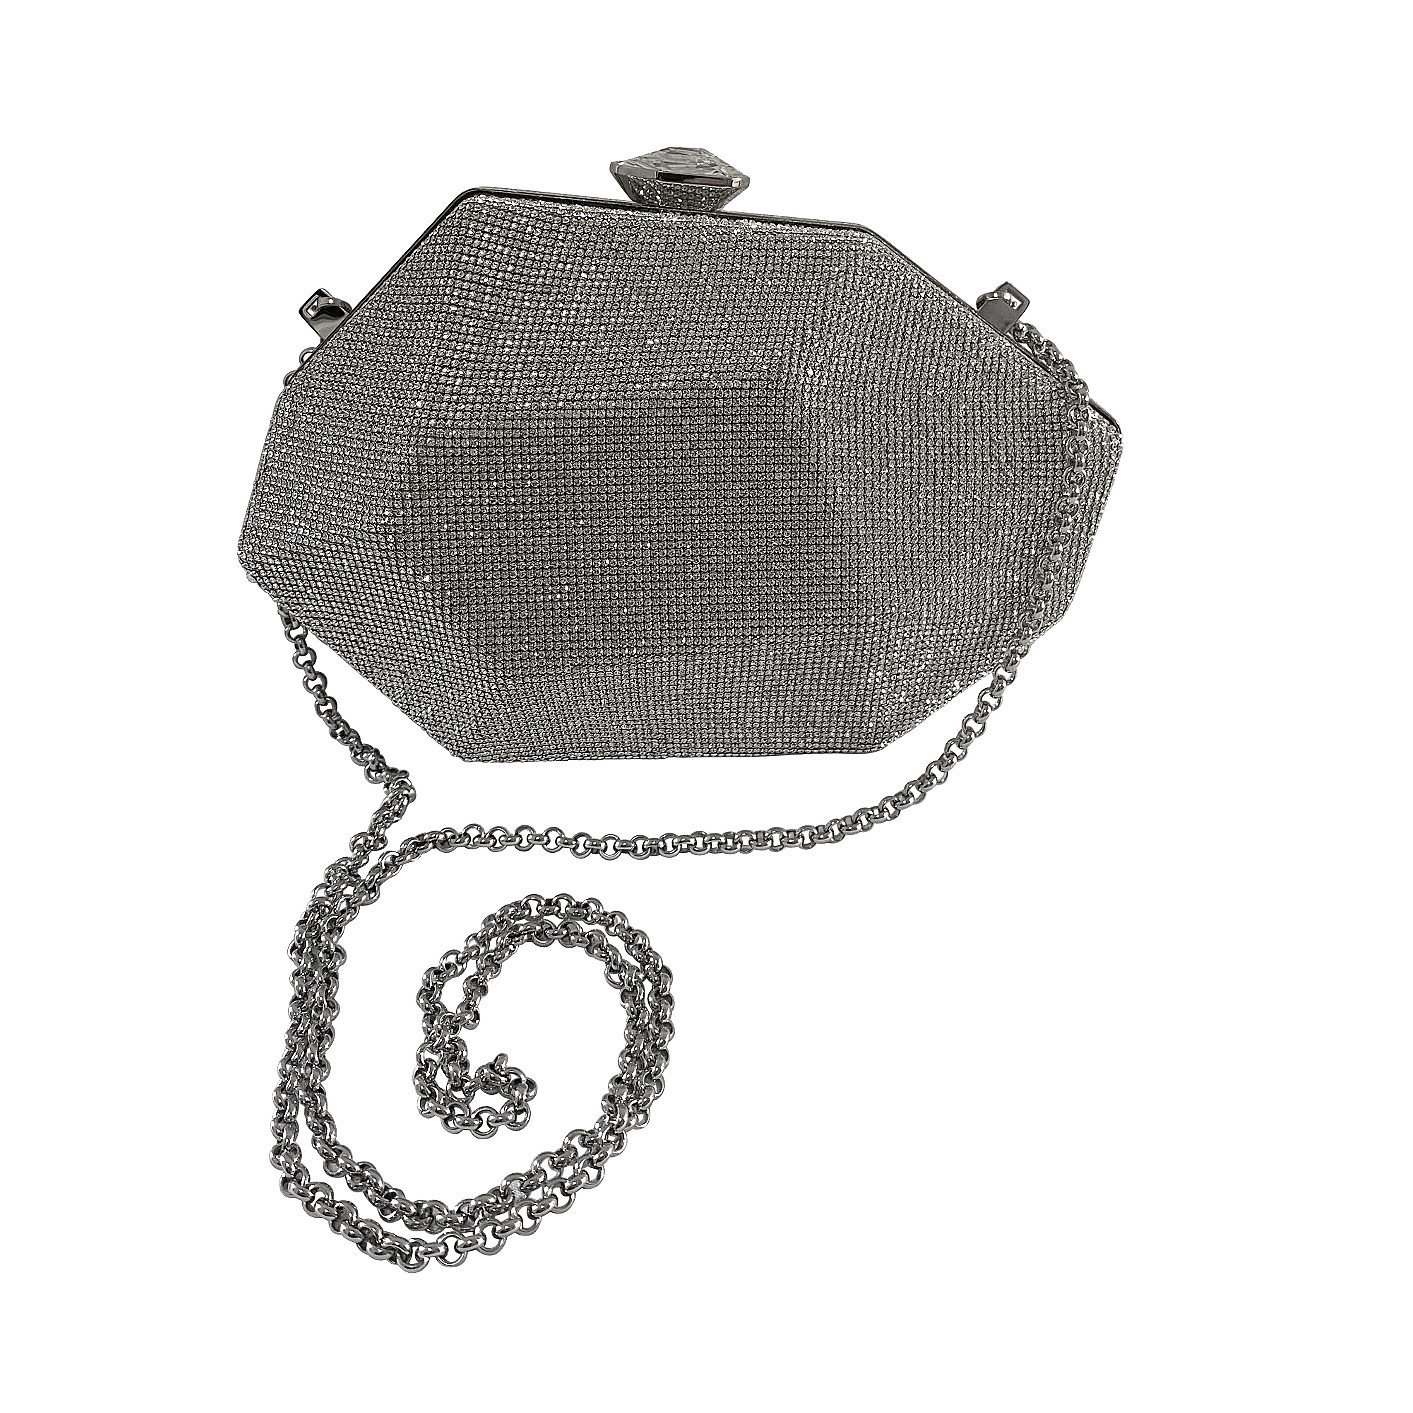 Atelier Swarovski Crystal geometric clutch with satin contrast and chain silver